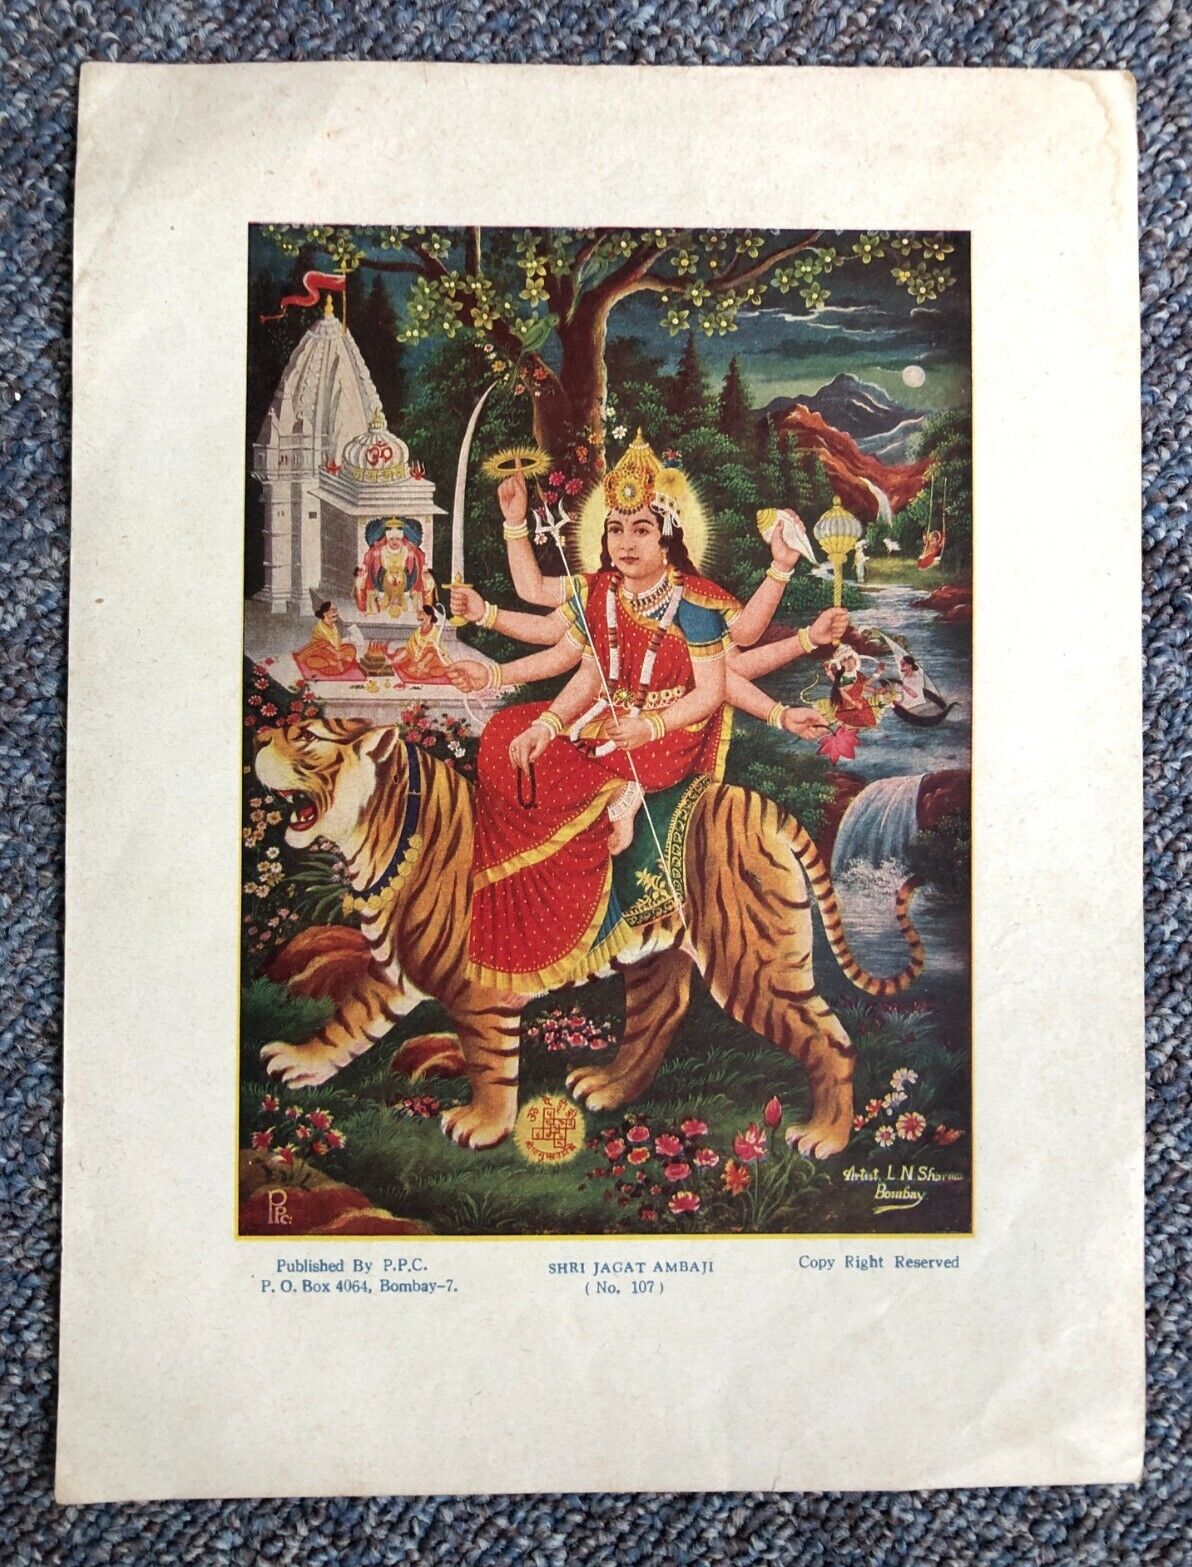 (1004) Rare Antique Hindu Art Print from India, c. 1940s: Goddess Durga